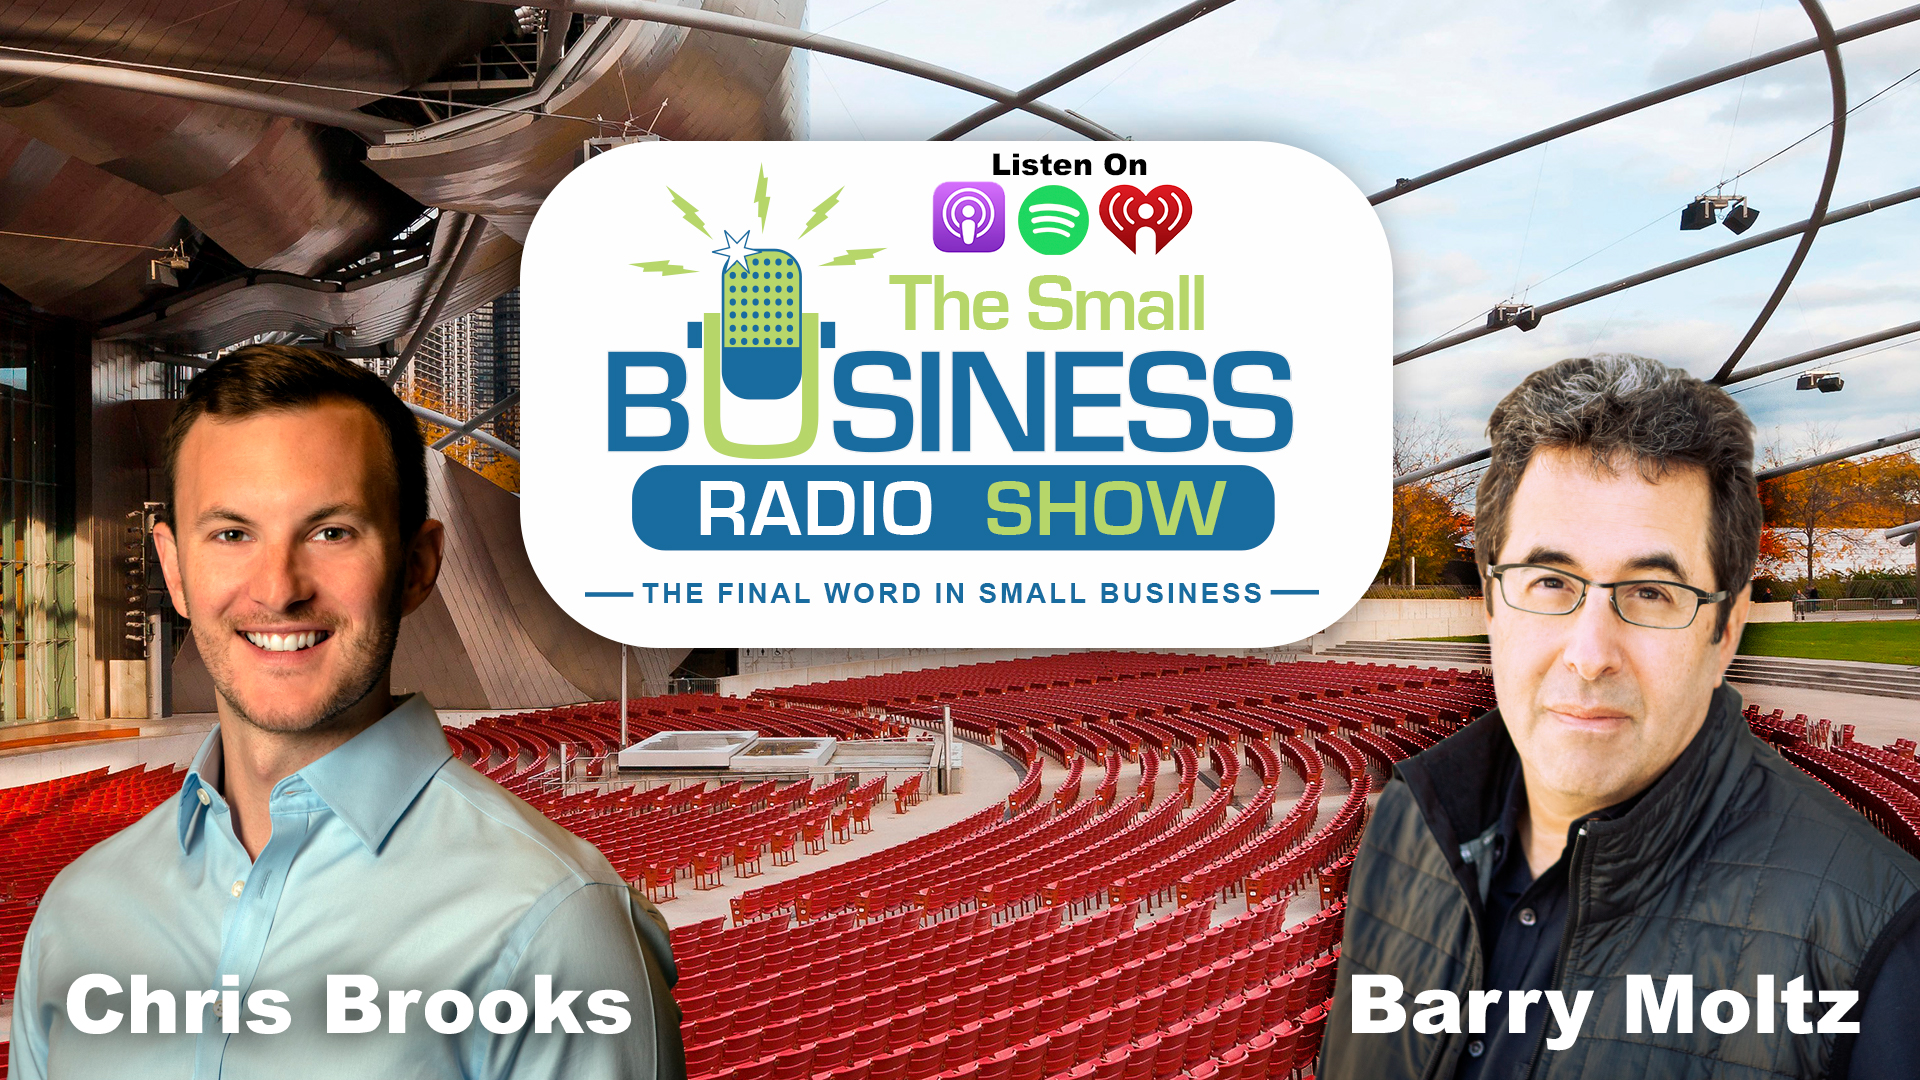 Chris Brooks on The Small Business Radio Show